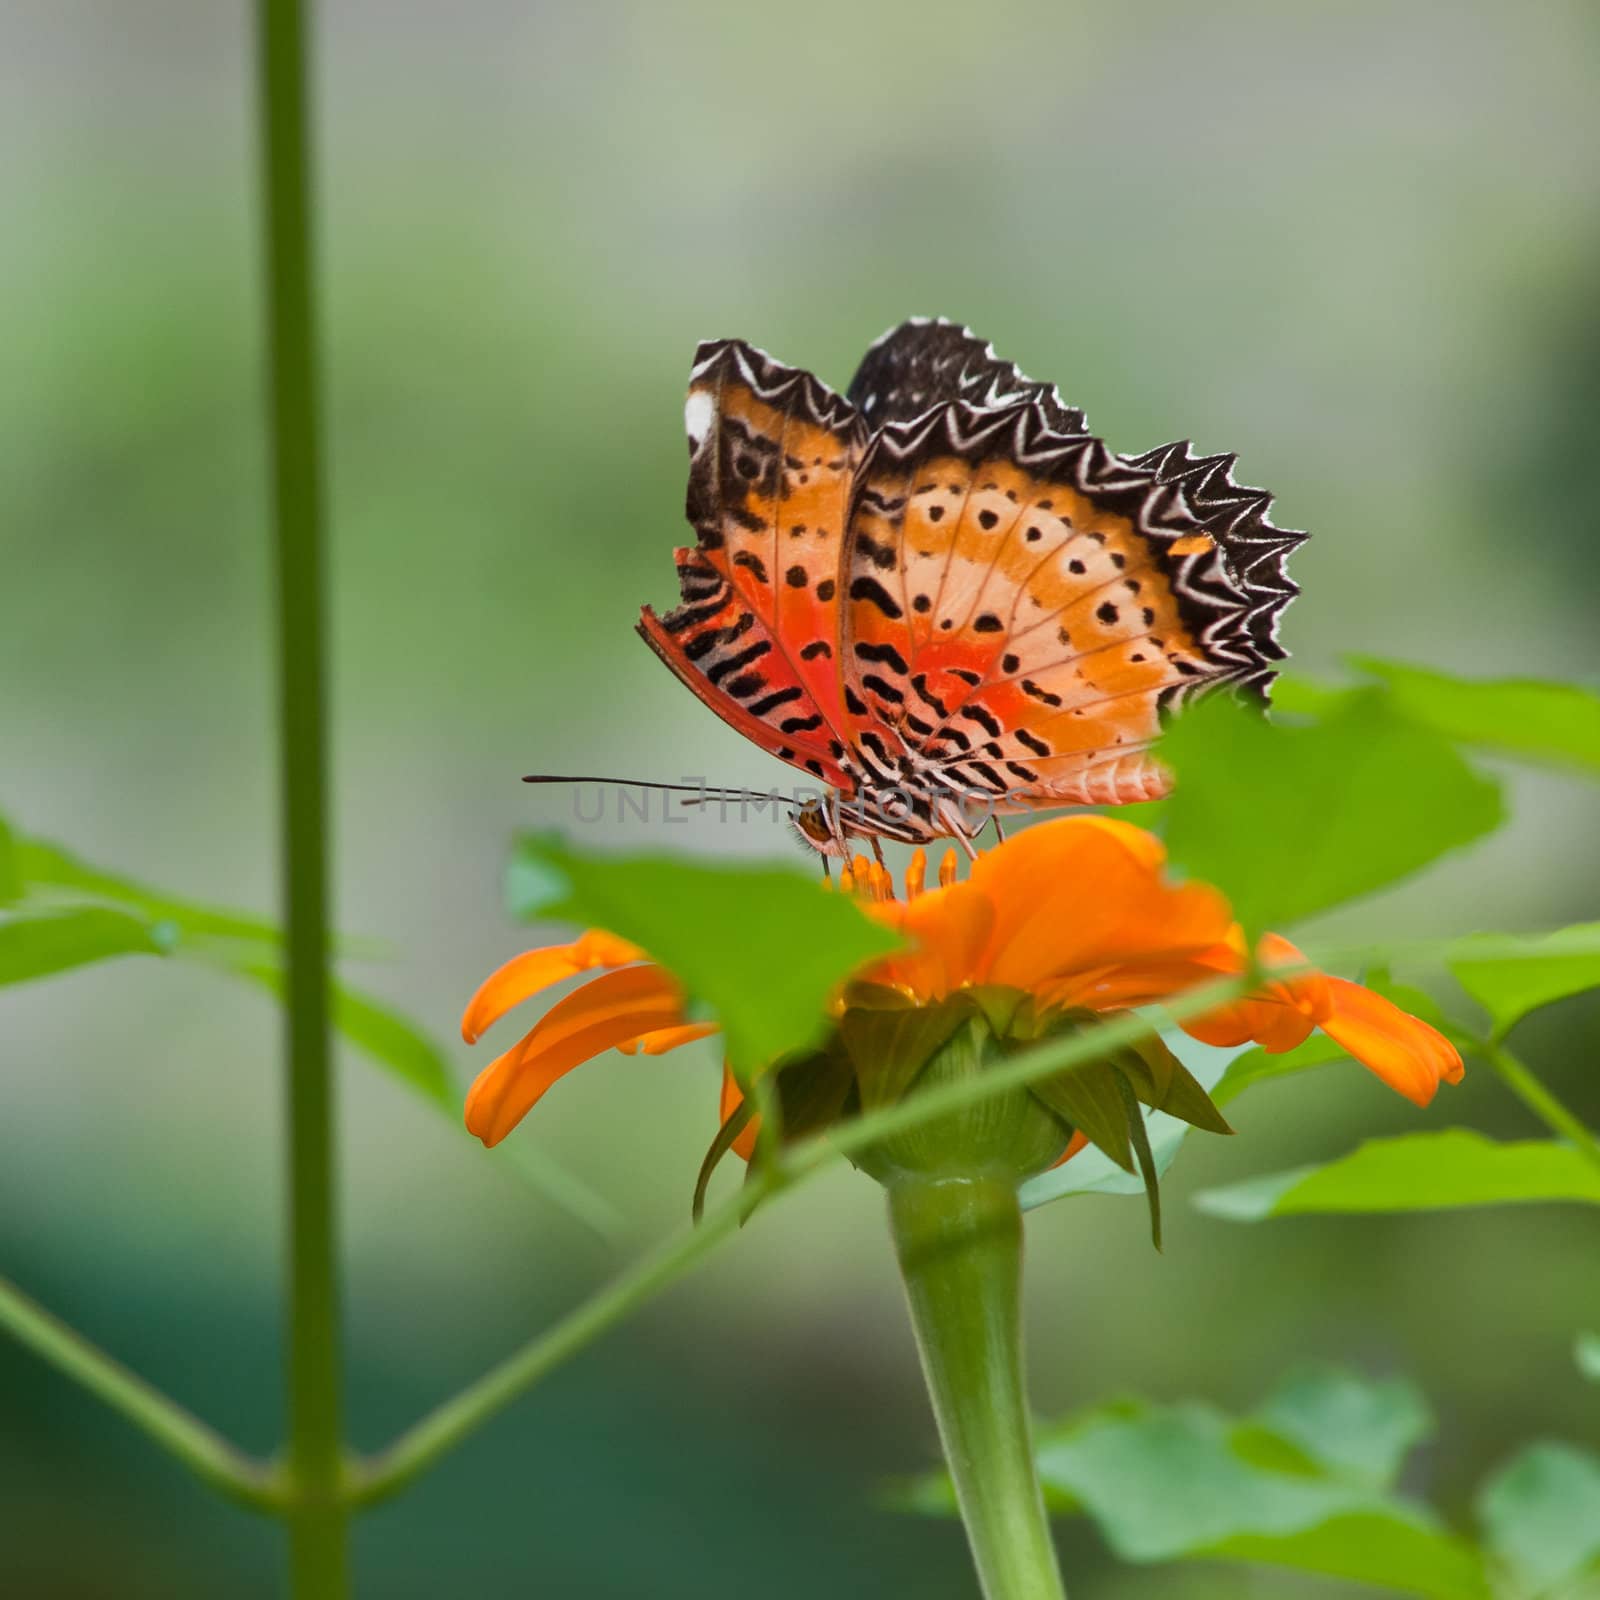 A beautiful butterfly sitting in the flower by jakgree